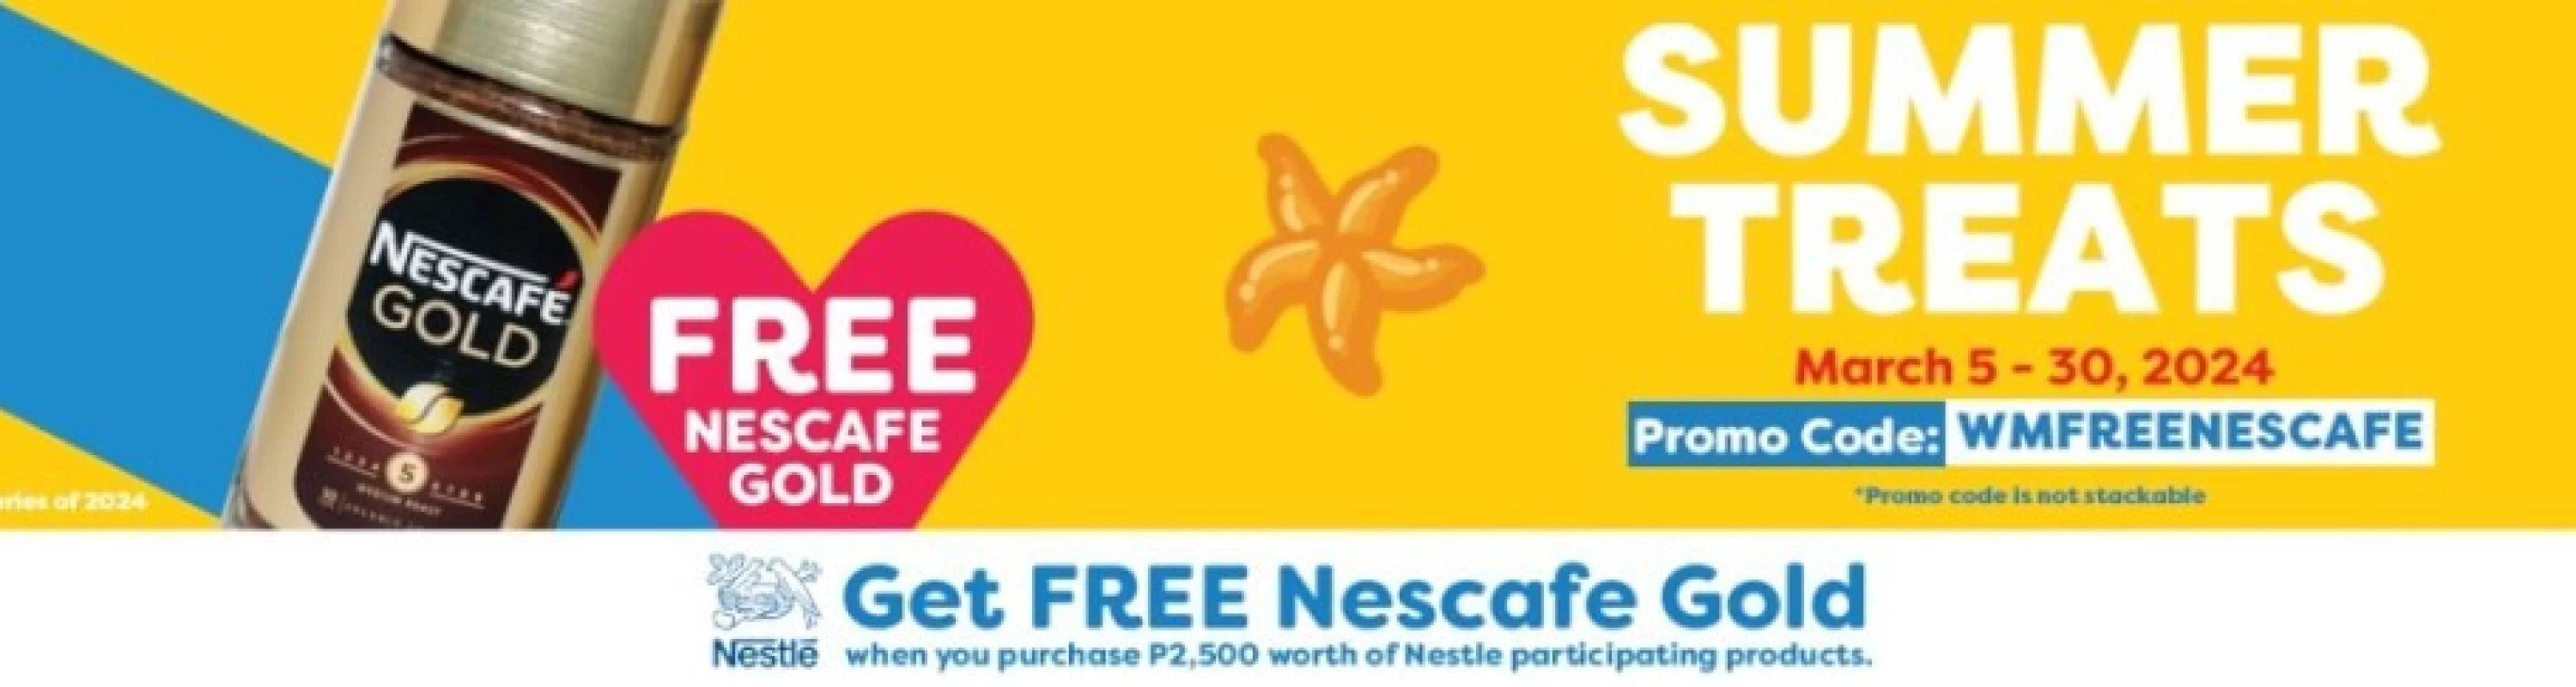 Nestle Summer Treats – Free Nescafe Gold